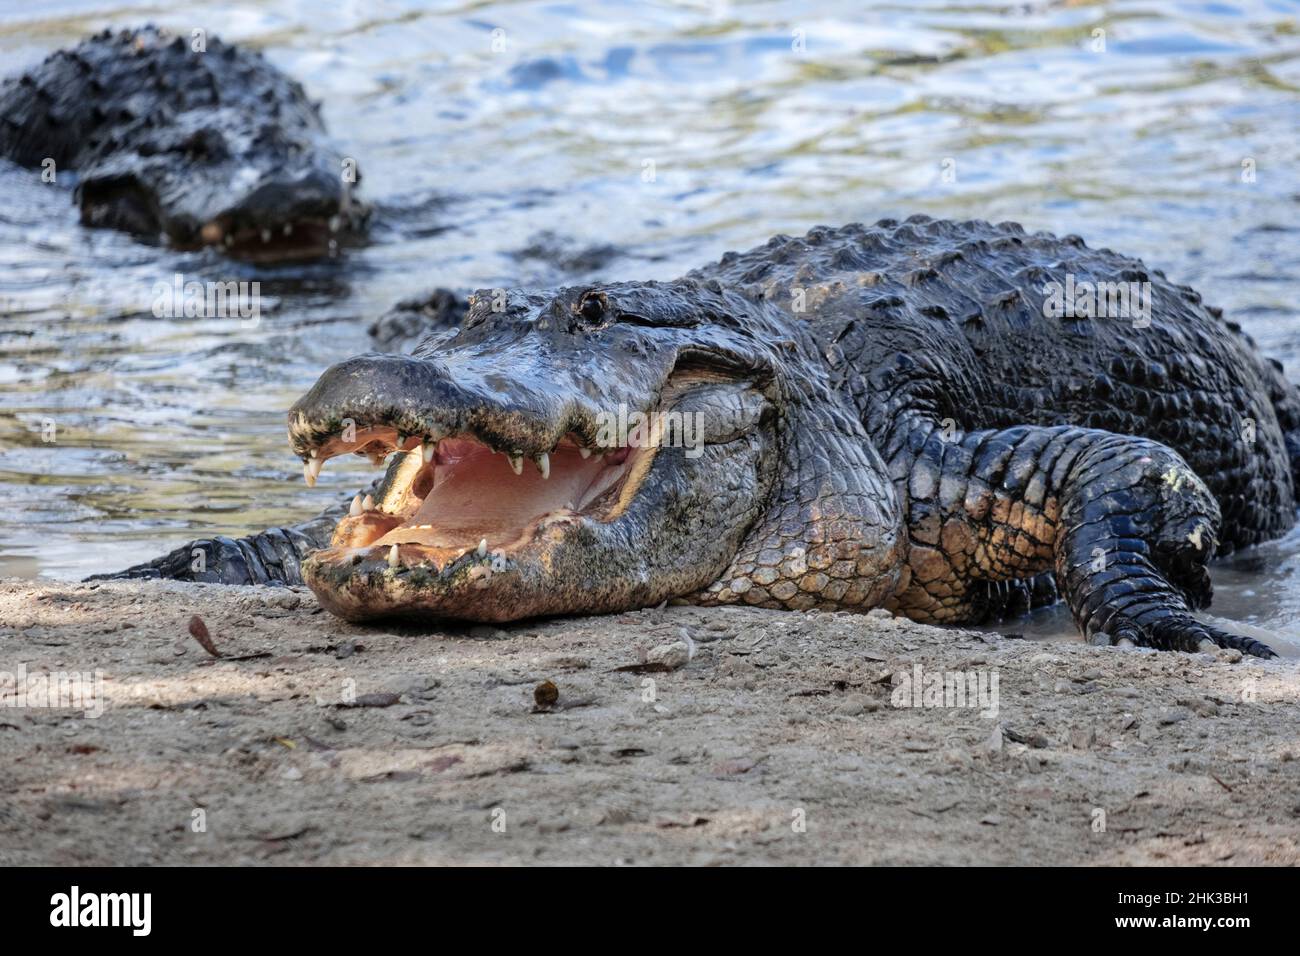 American alligator, Florida Stock Photo